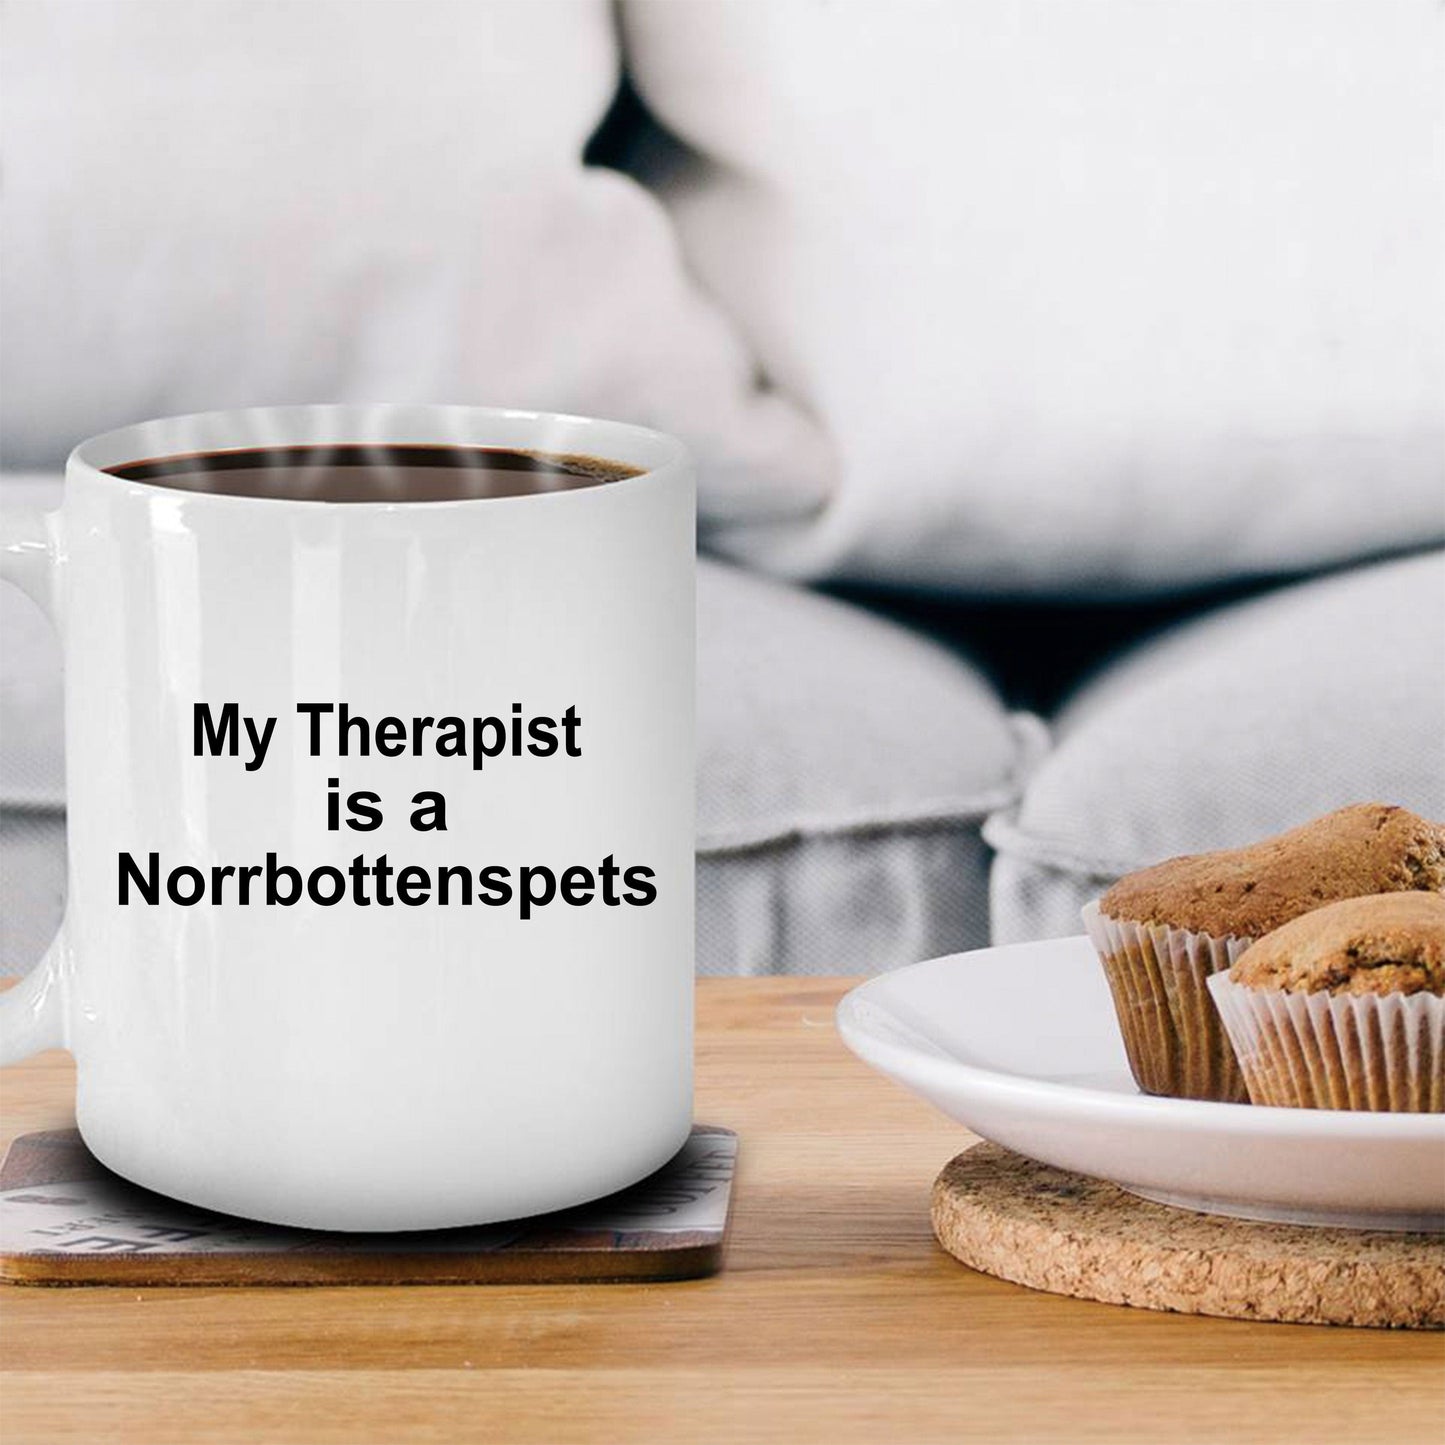 Norrbottenspets Dog Therapist Coffee Mug